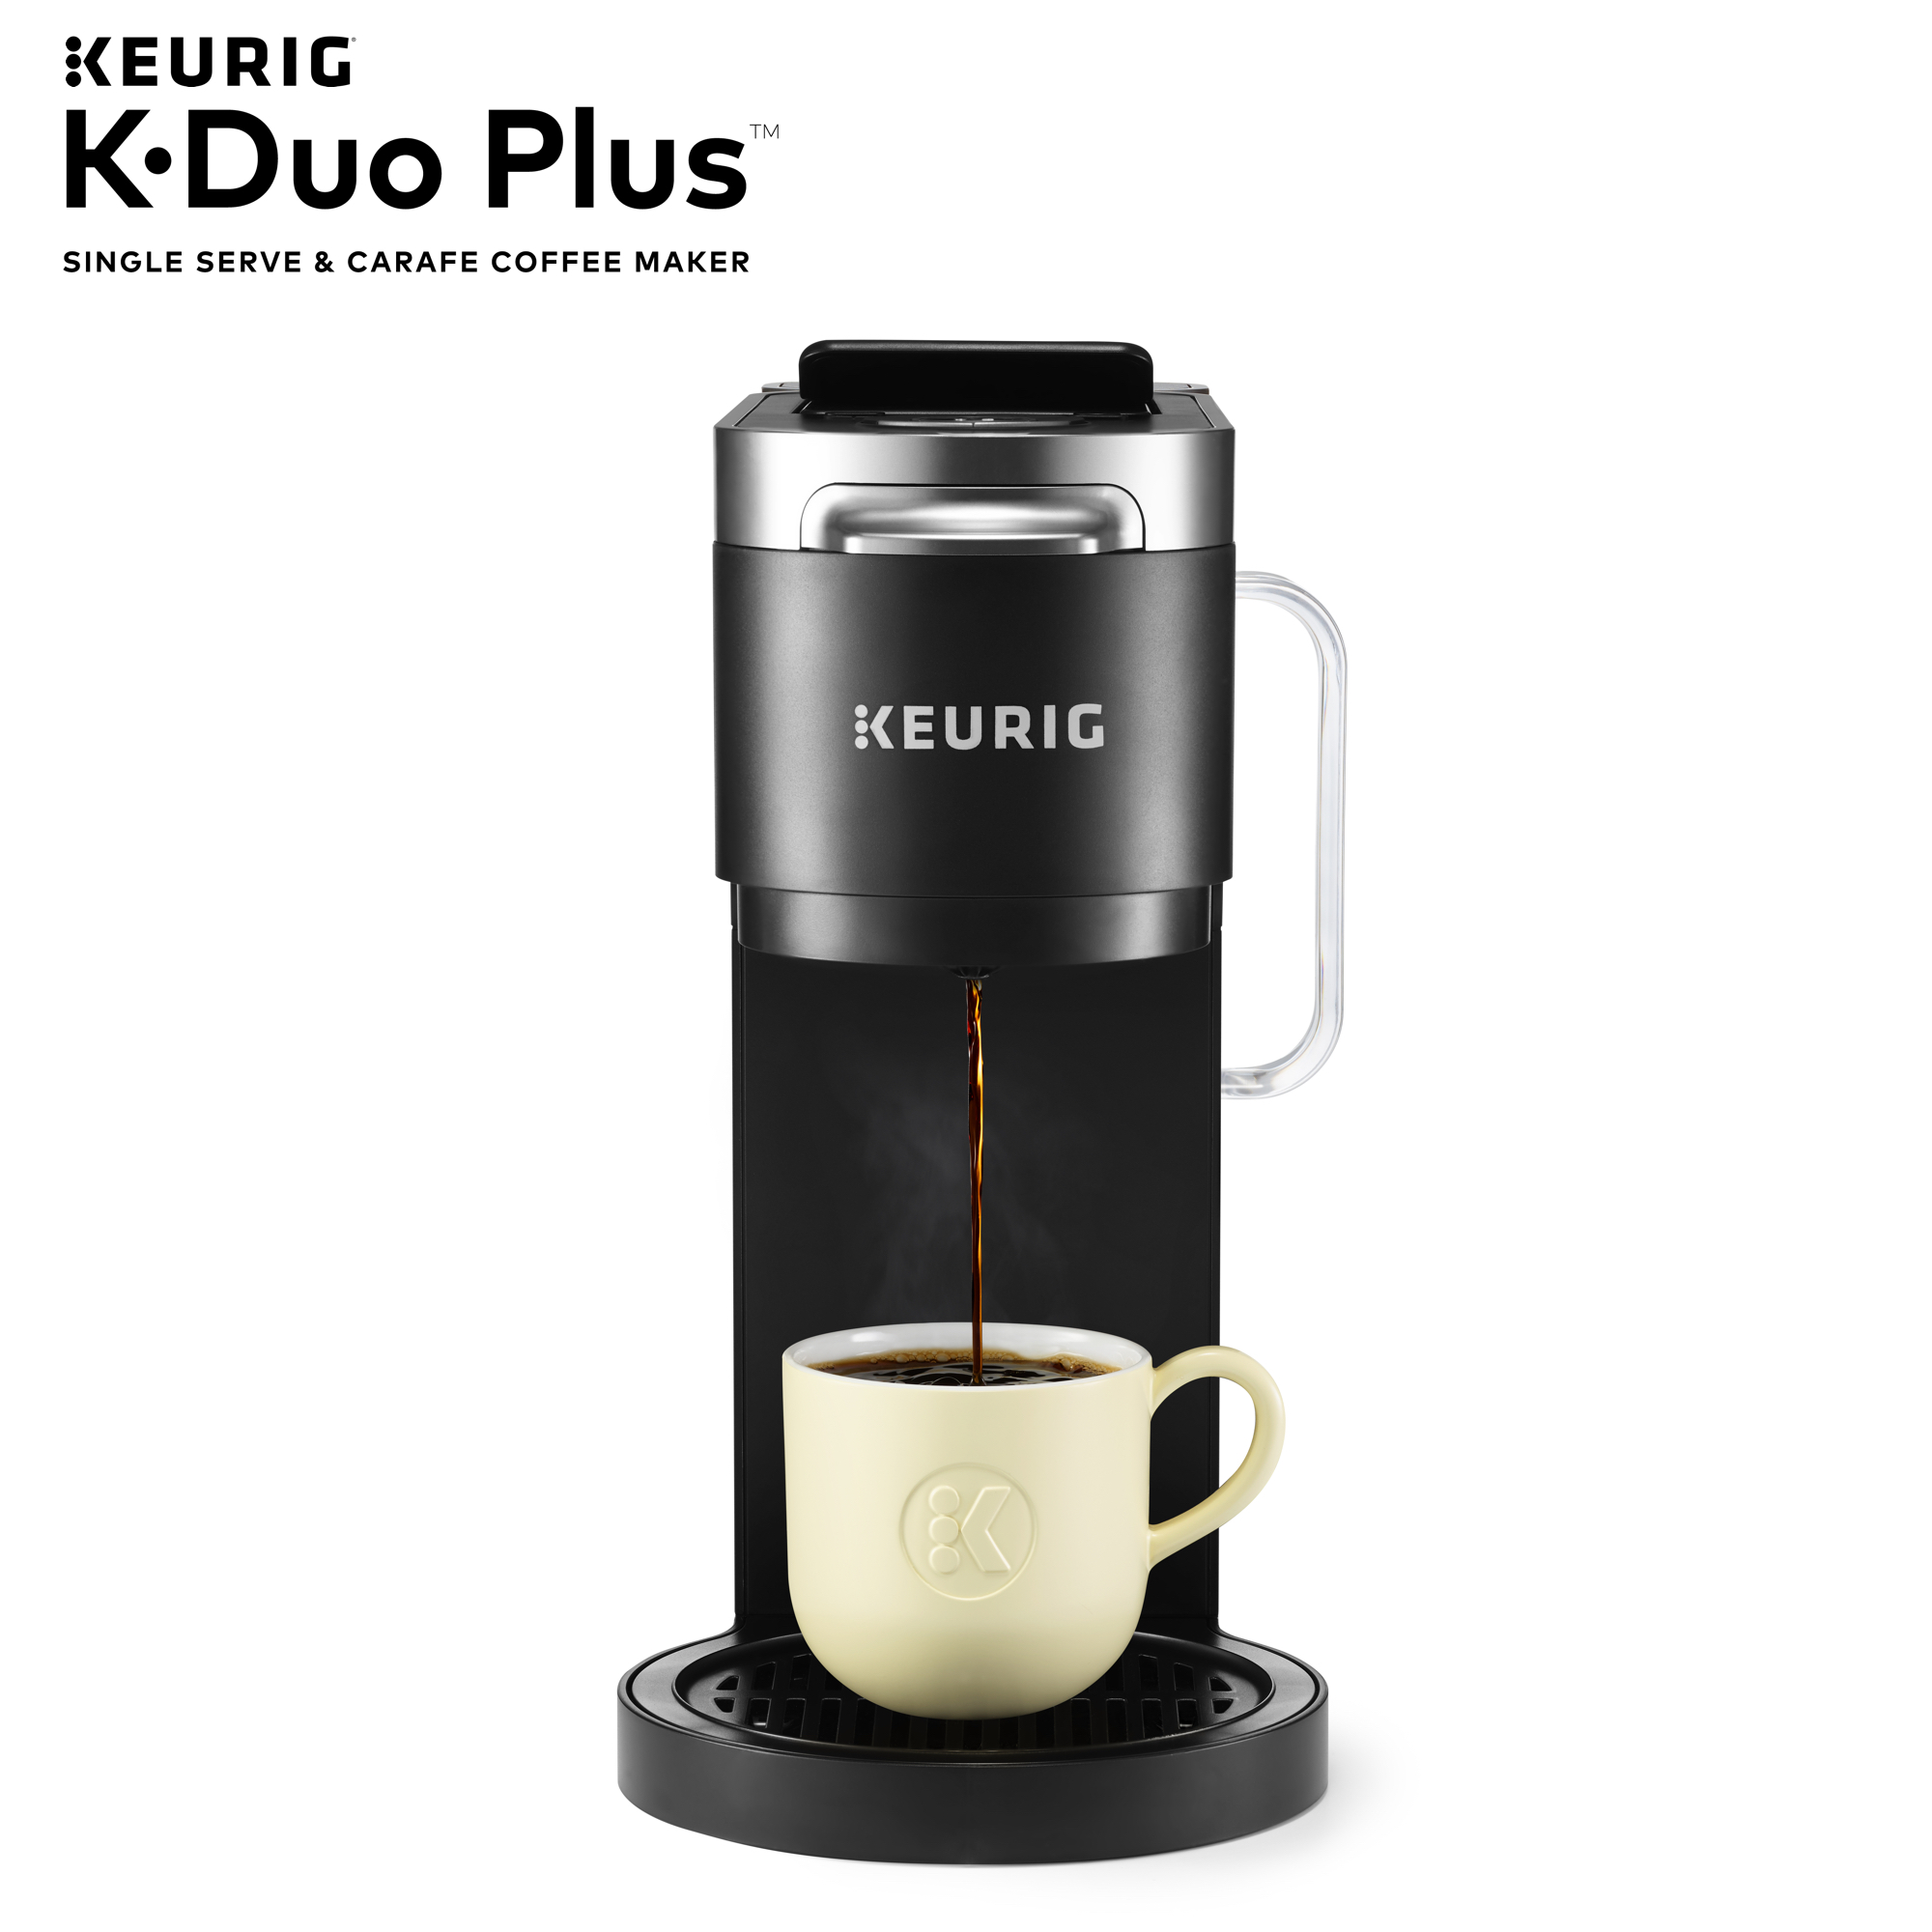 Keurig K-Duo Plus Single Serve & Carafe Coffee Maker - image 9 of 25